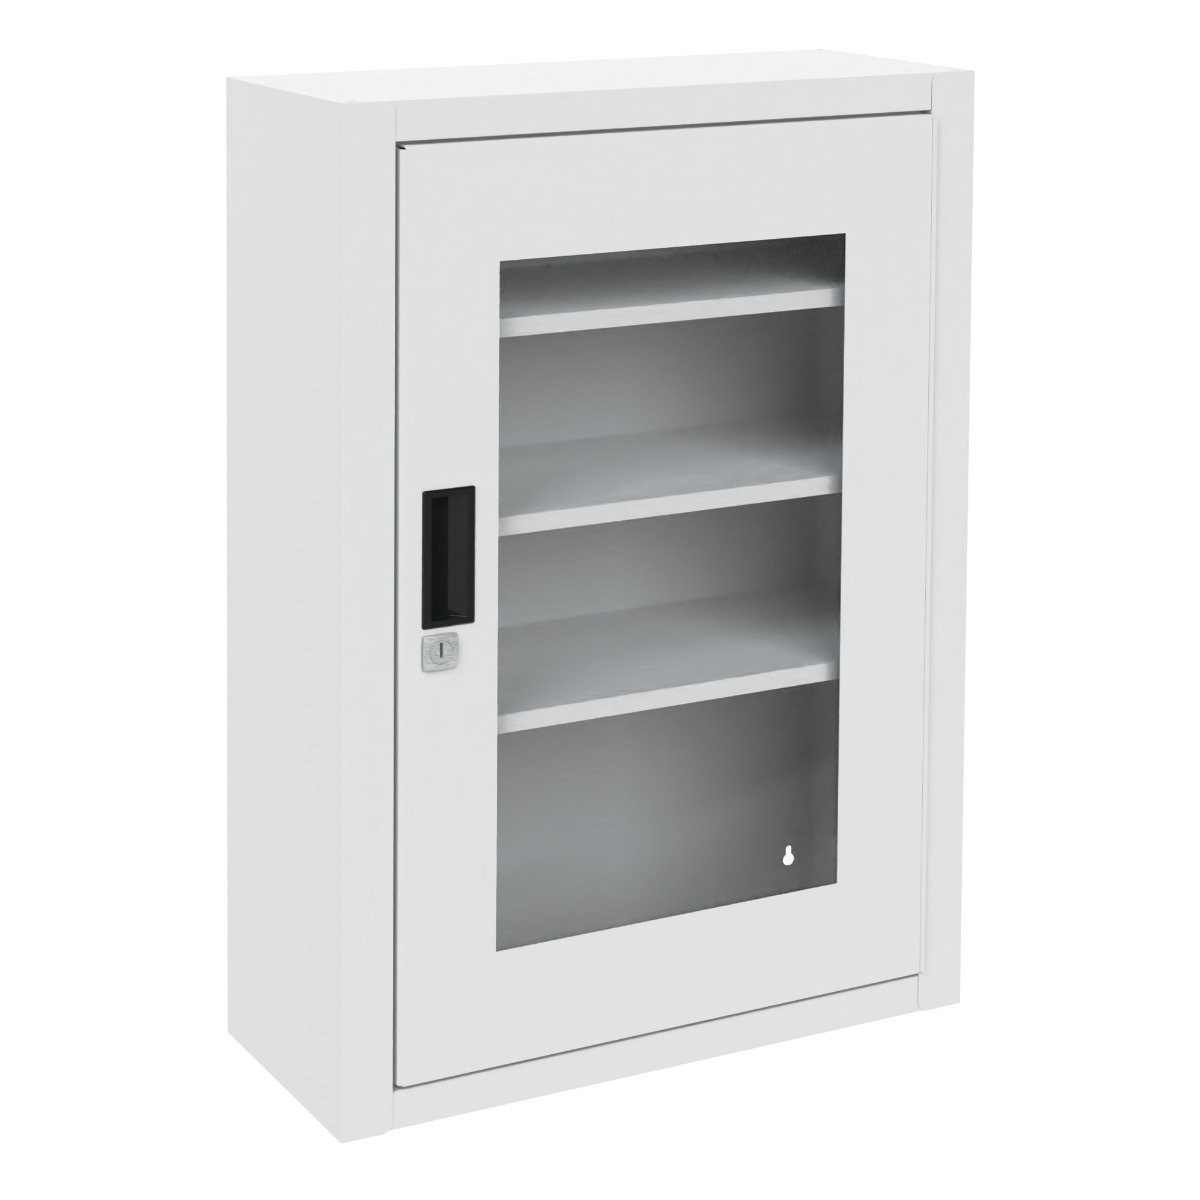 4-Shelf First Aid Cabinet with Locking Door